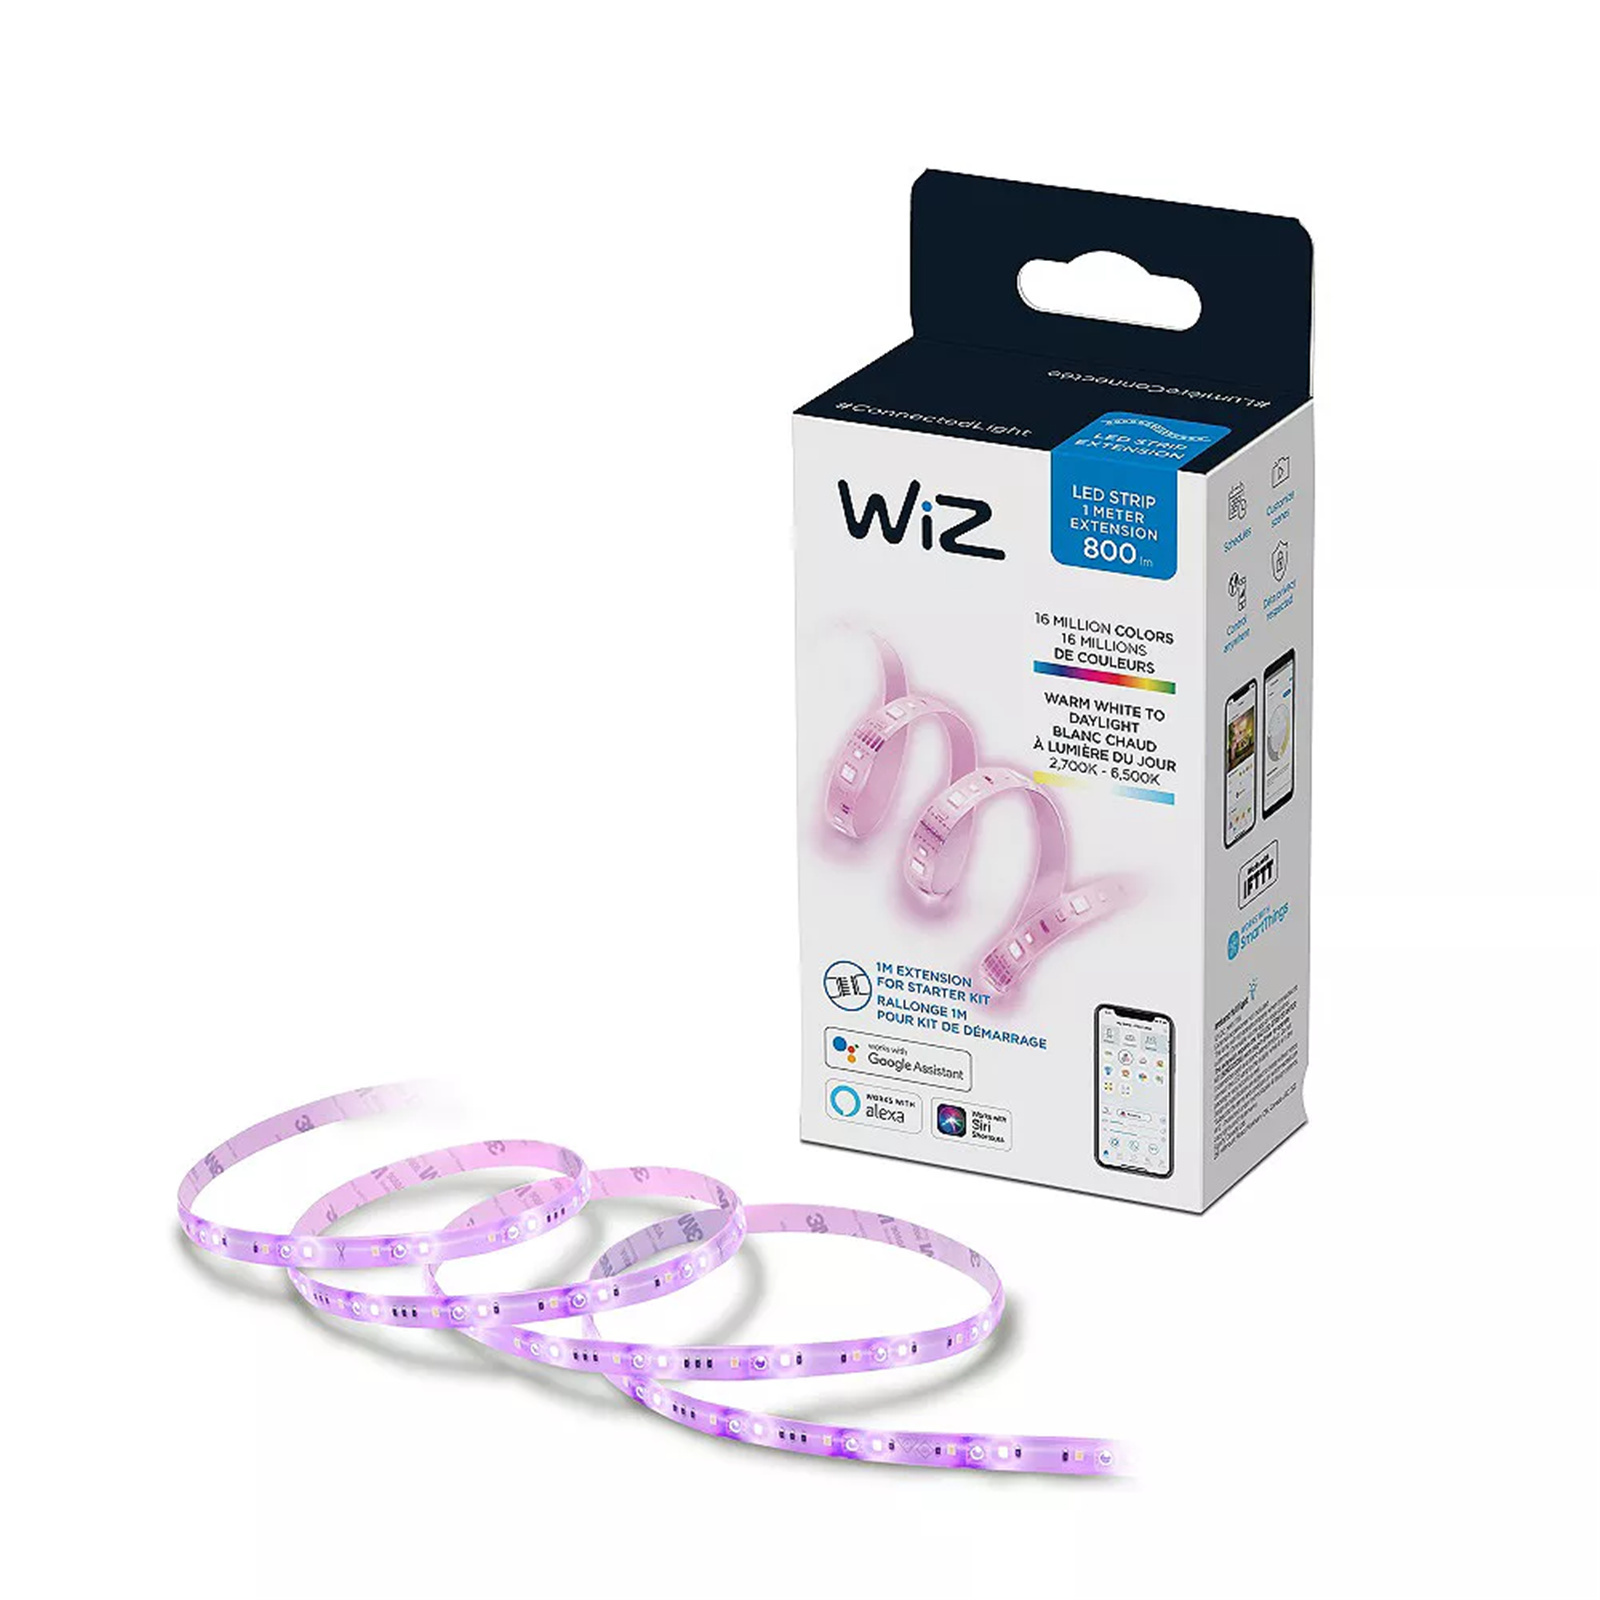 WiZ LED Light Strip Extension (1m)